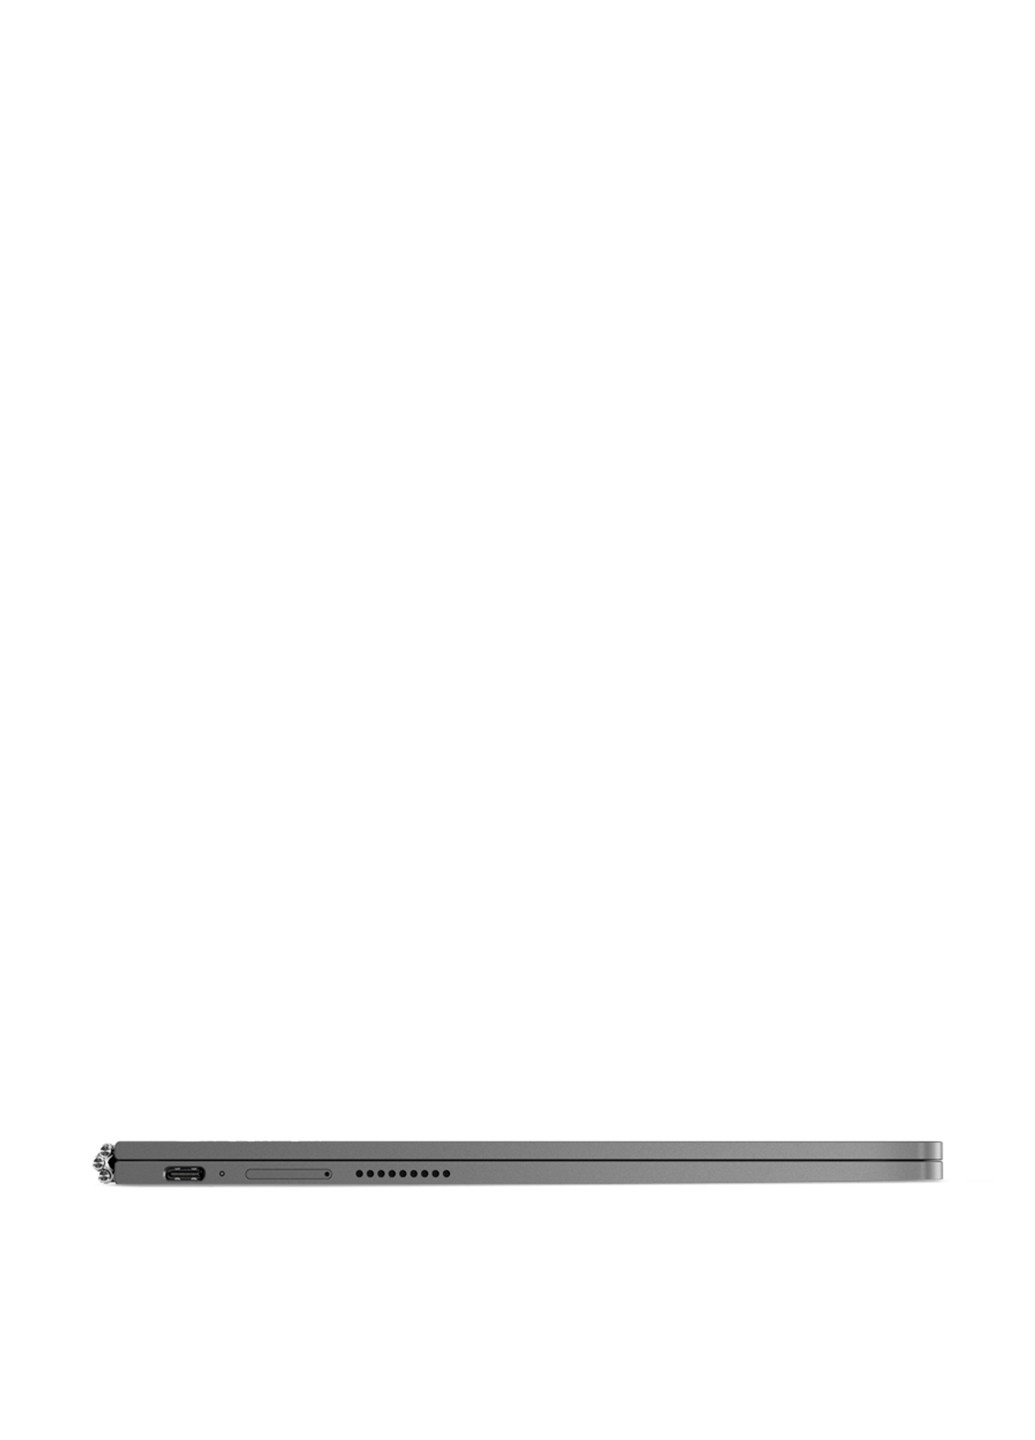 Планшет Yoga Book 2 Pro (ZA3S0044UA) Iron Gray Lenovo yb-j912f 256ggrb za3s0044ua (130103643)